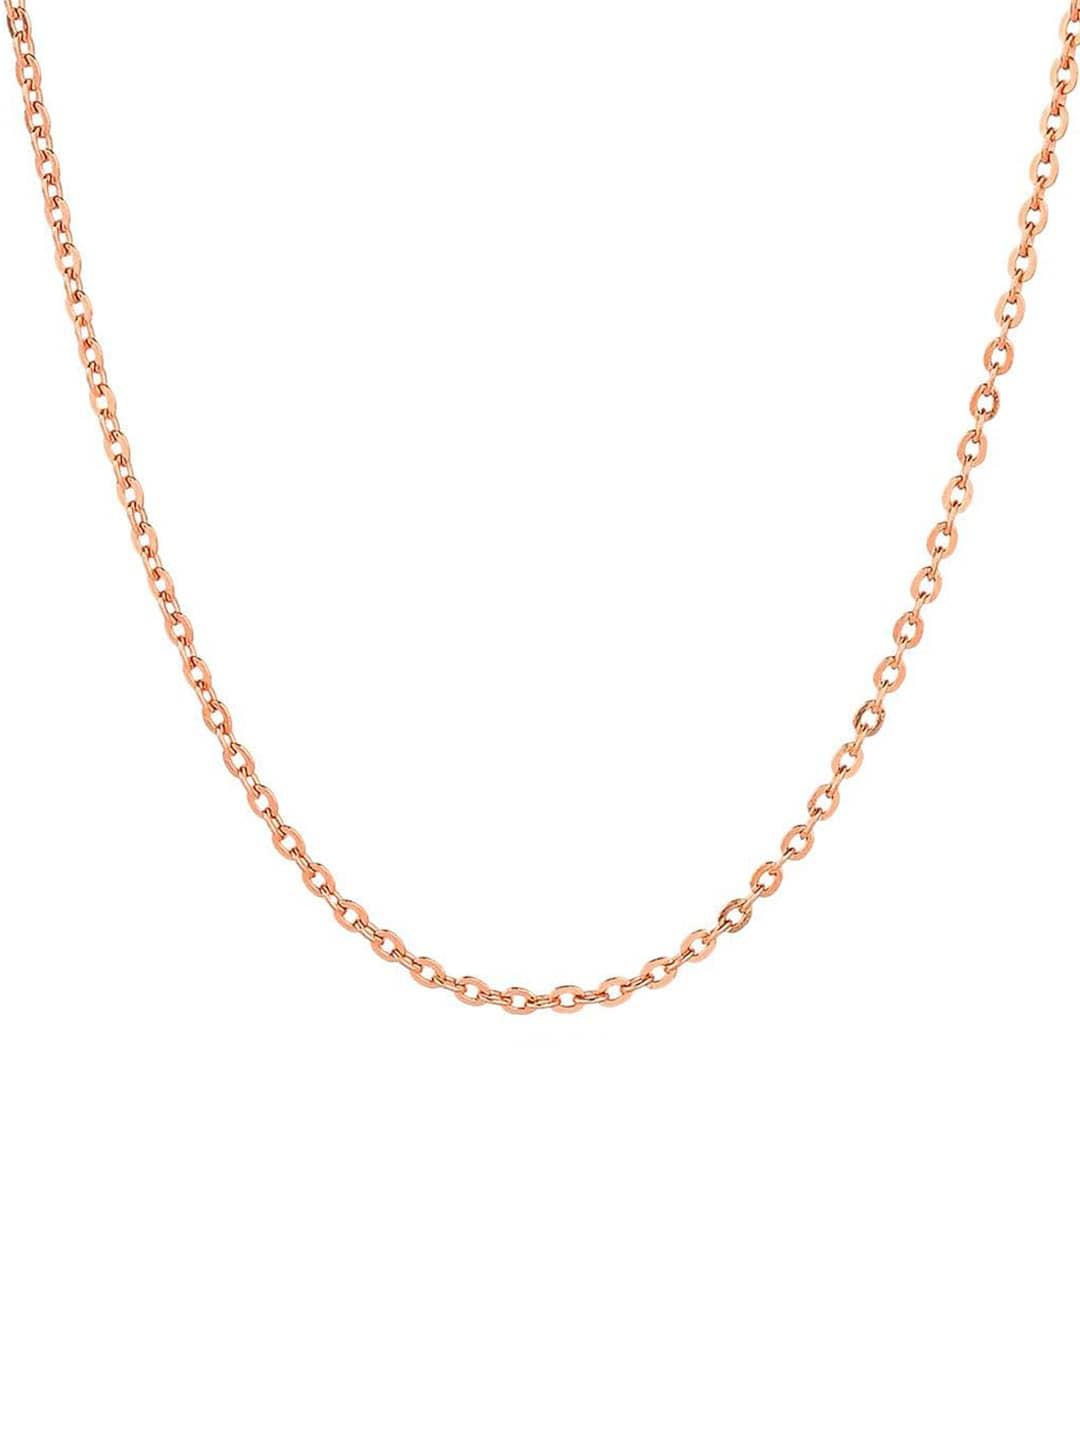 candere a kalyan jewellers company 18kt bis hallmark rose gold chain-1.57gm